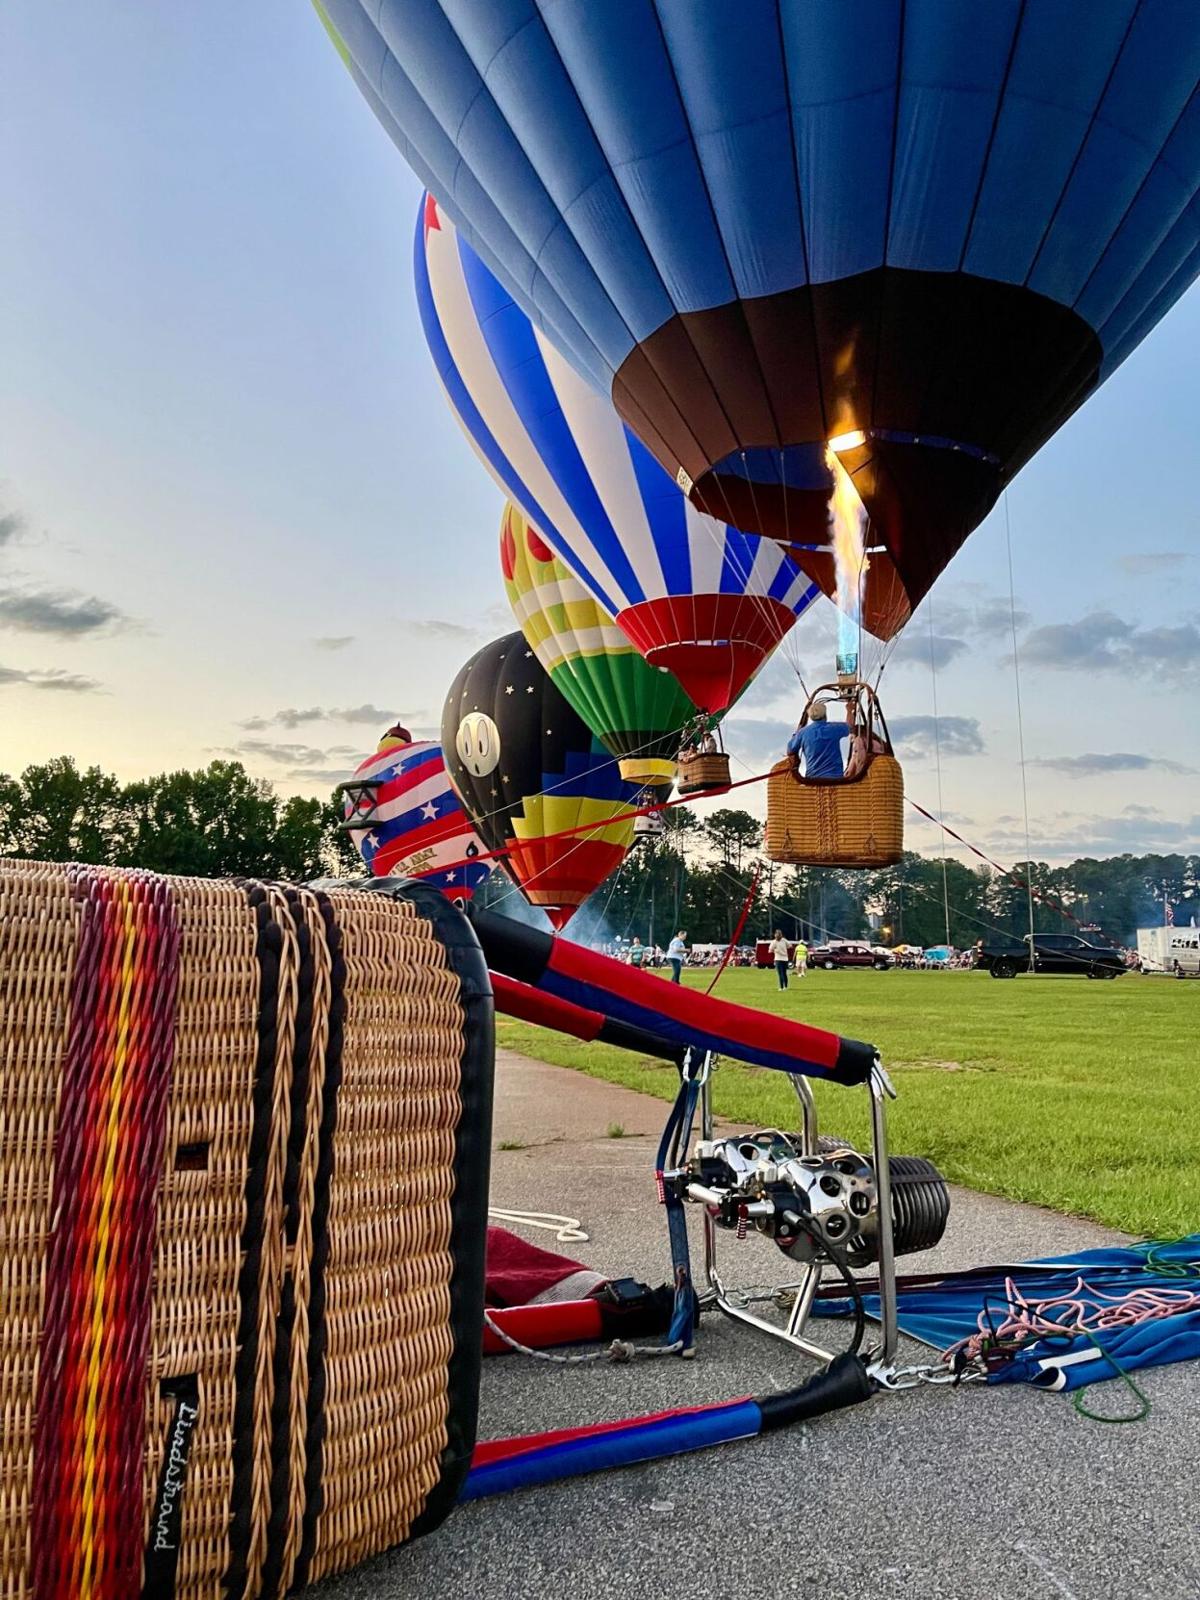 PHOTOS: Scenes from the 2022 Gwinnett Hot Air Balloon Festival